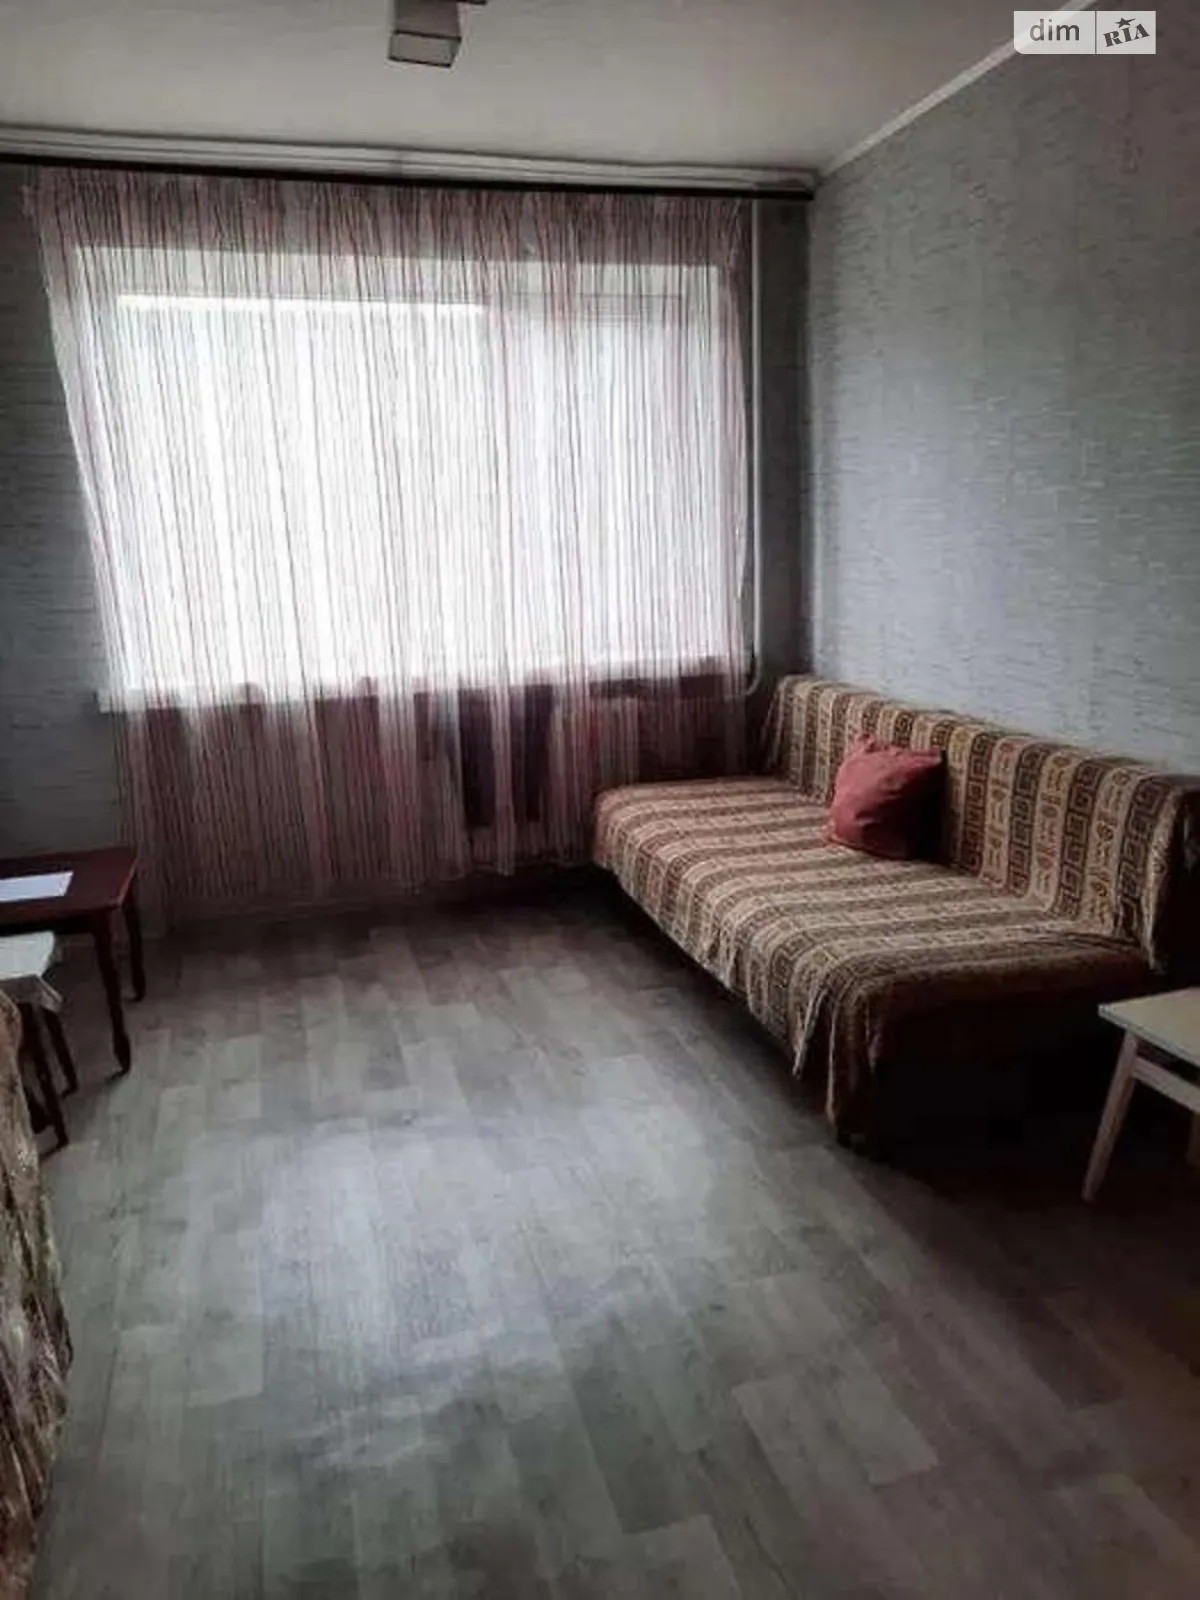 Продается комната 25 кв. м в Харькове - фото 2